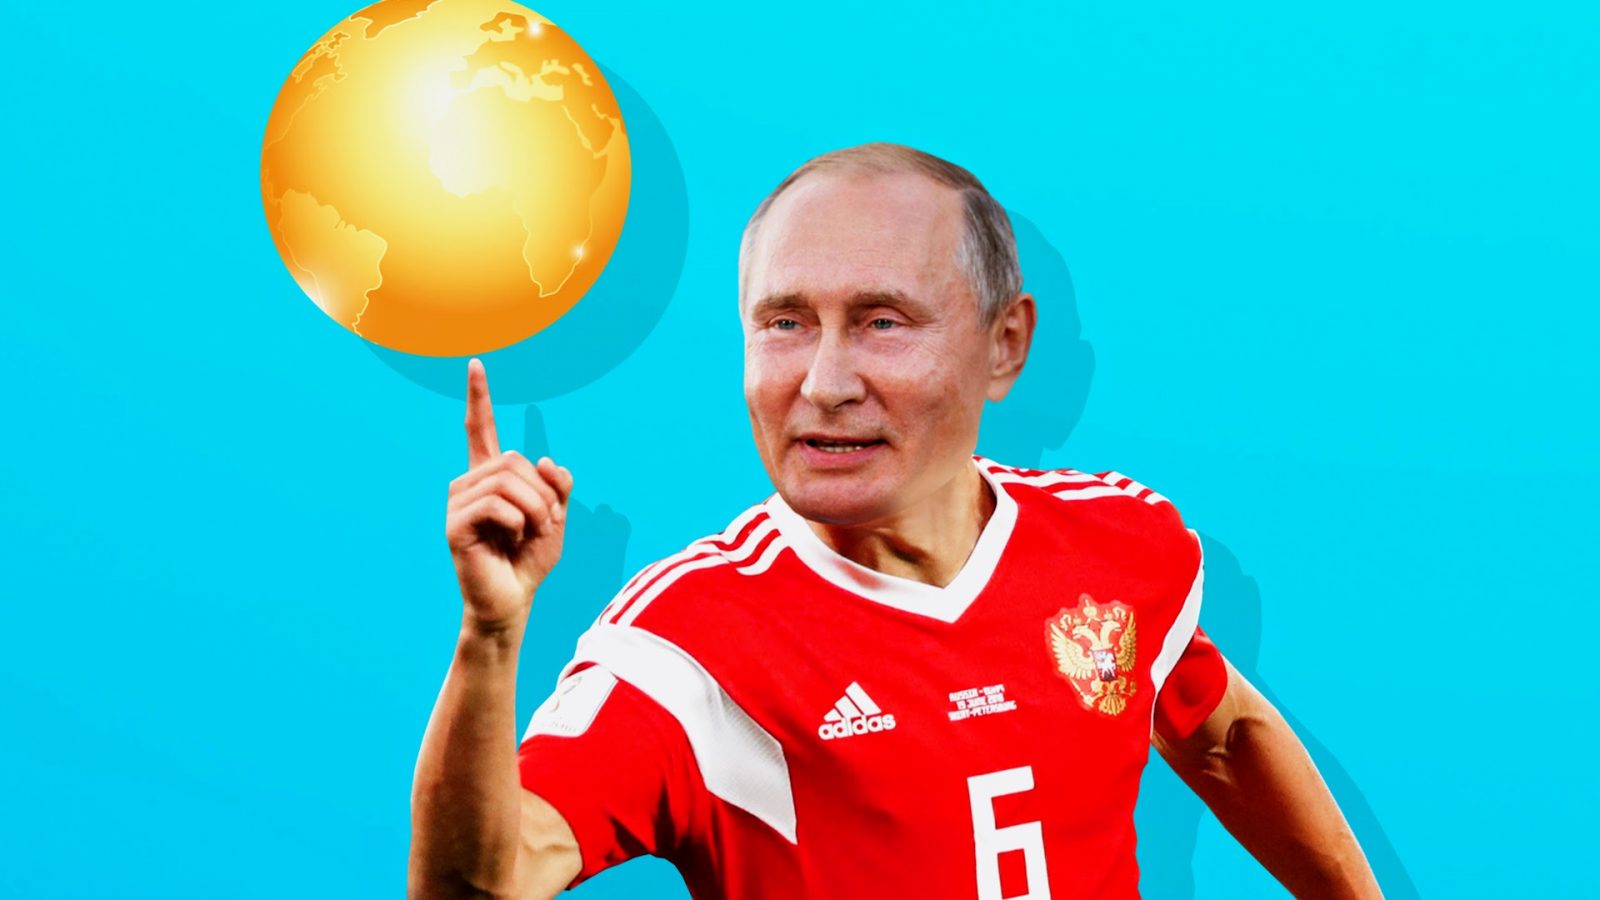 Vladimir Poutine footballer